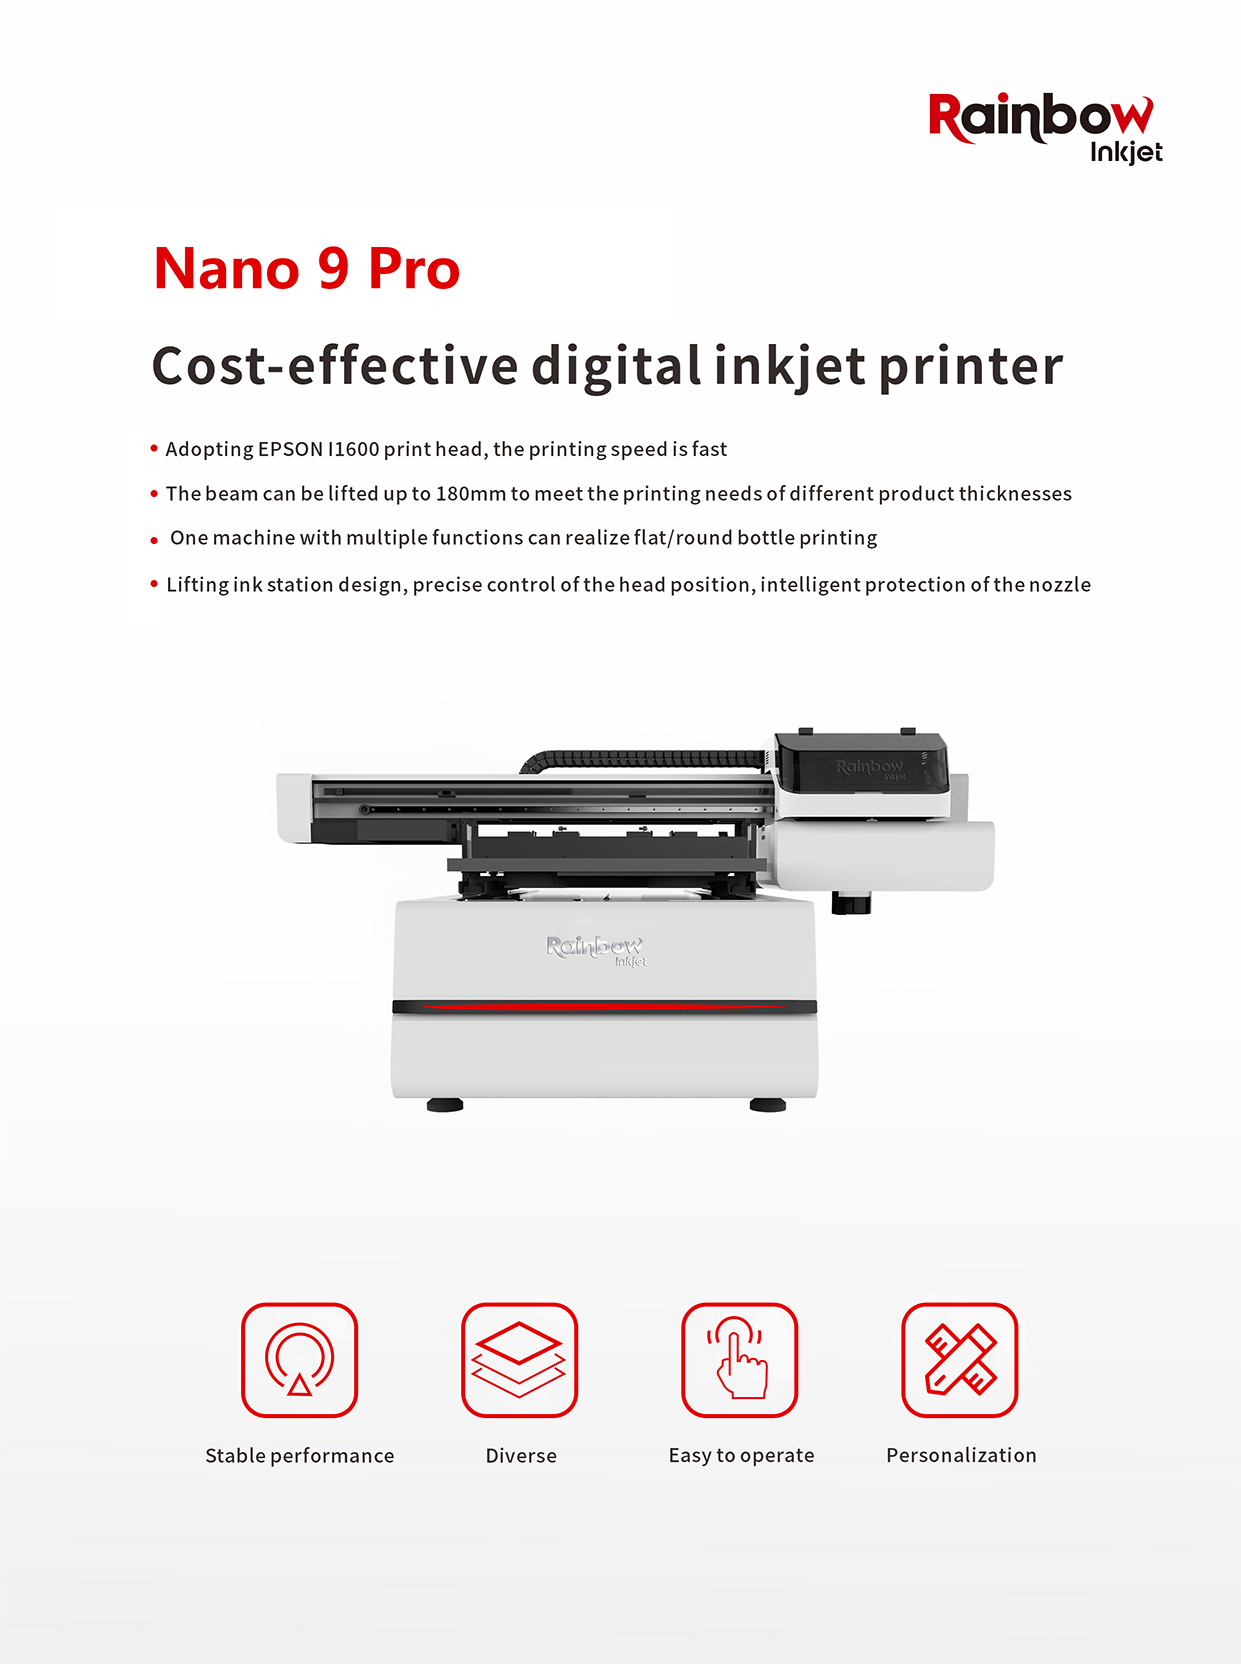 Impresora plana nano 9 pro uv con i1600 (1)